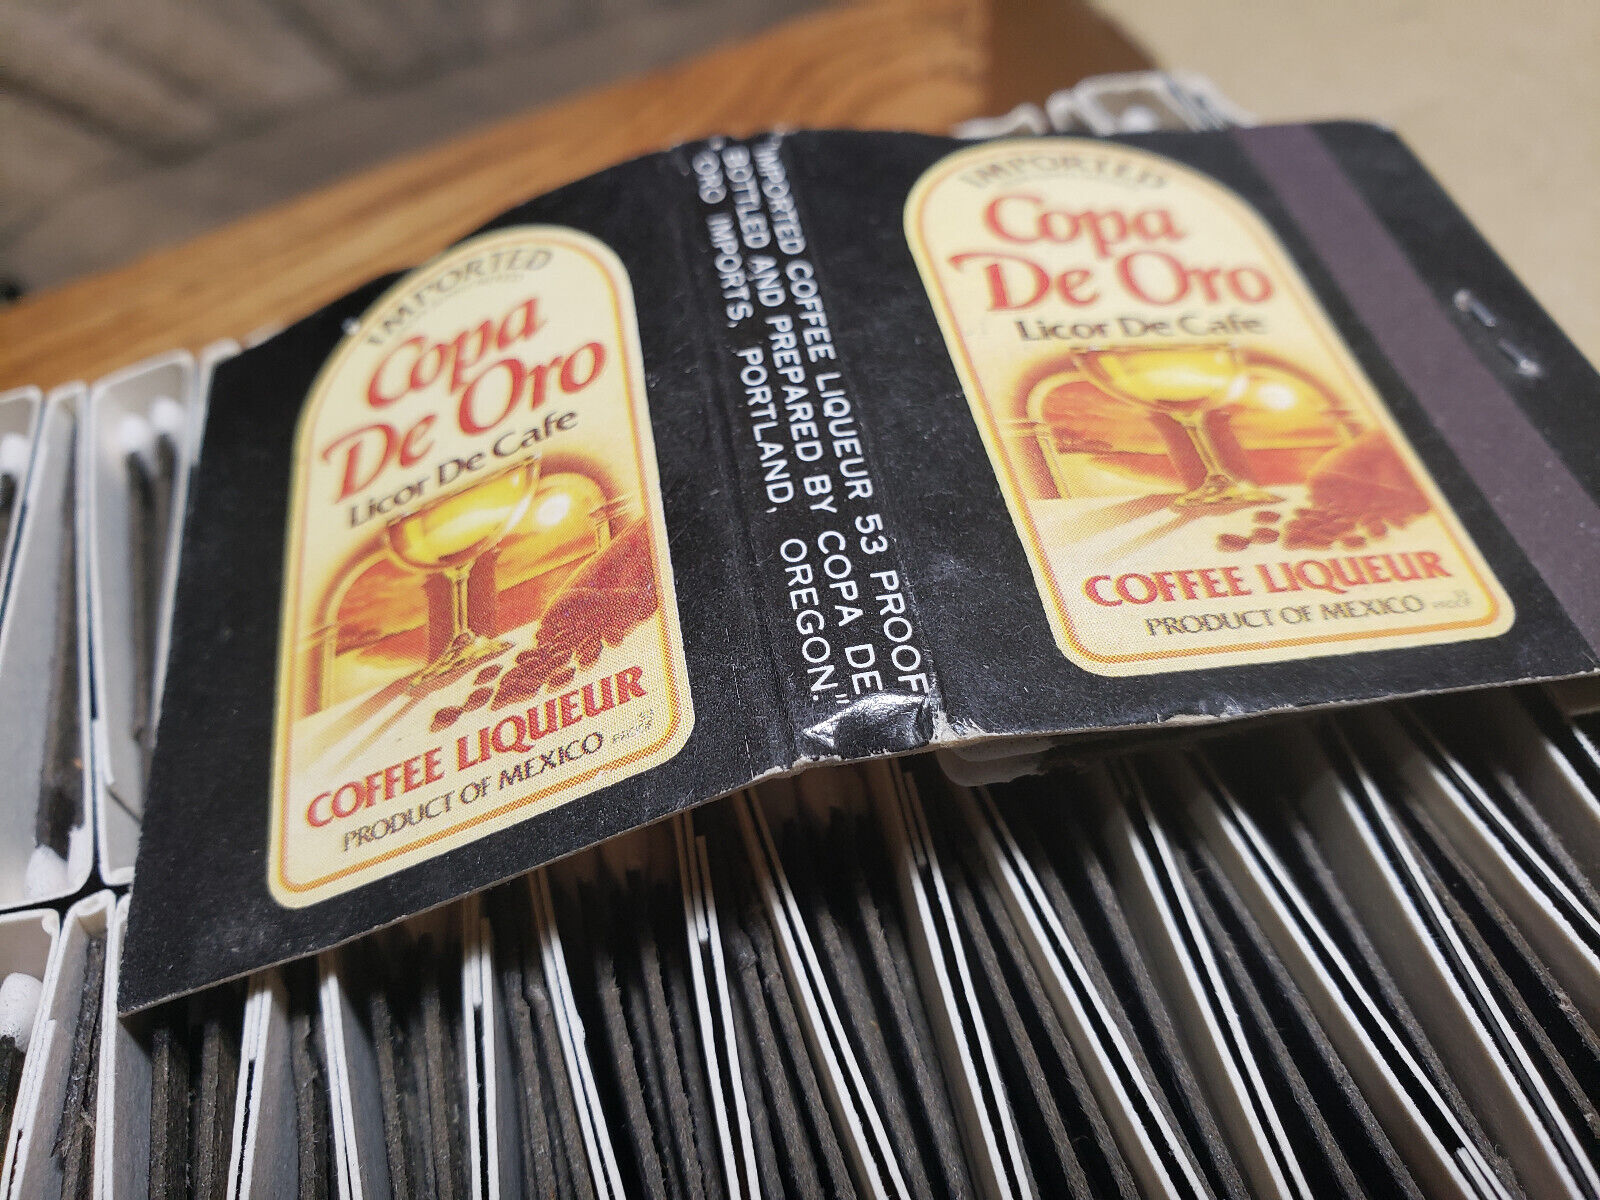 50 MATCHBOOKS Vtg COPA DE ORO Unstruck FULL BOOK Coffee Liquor Matches Sign NOS